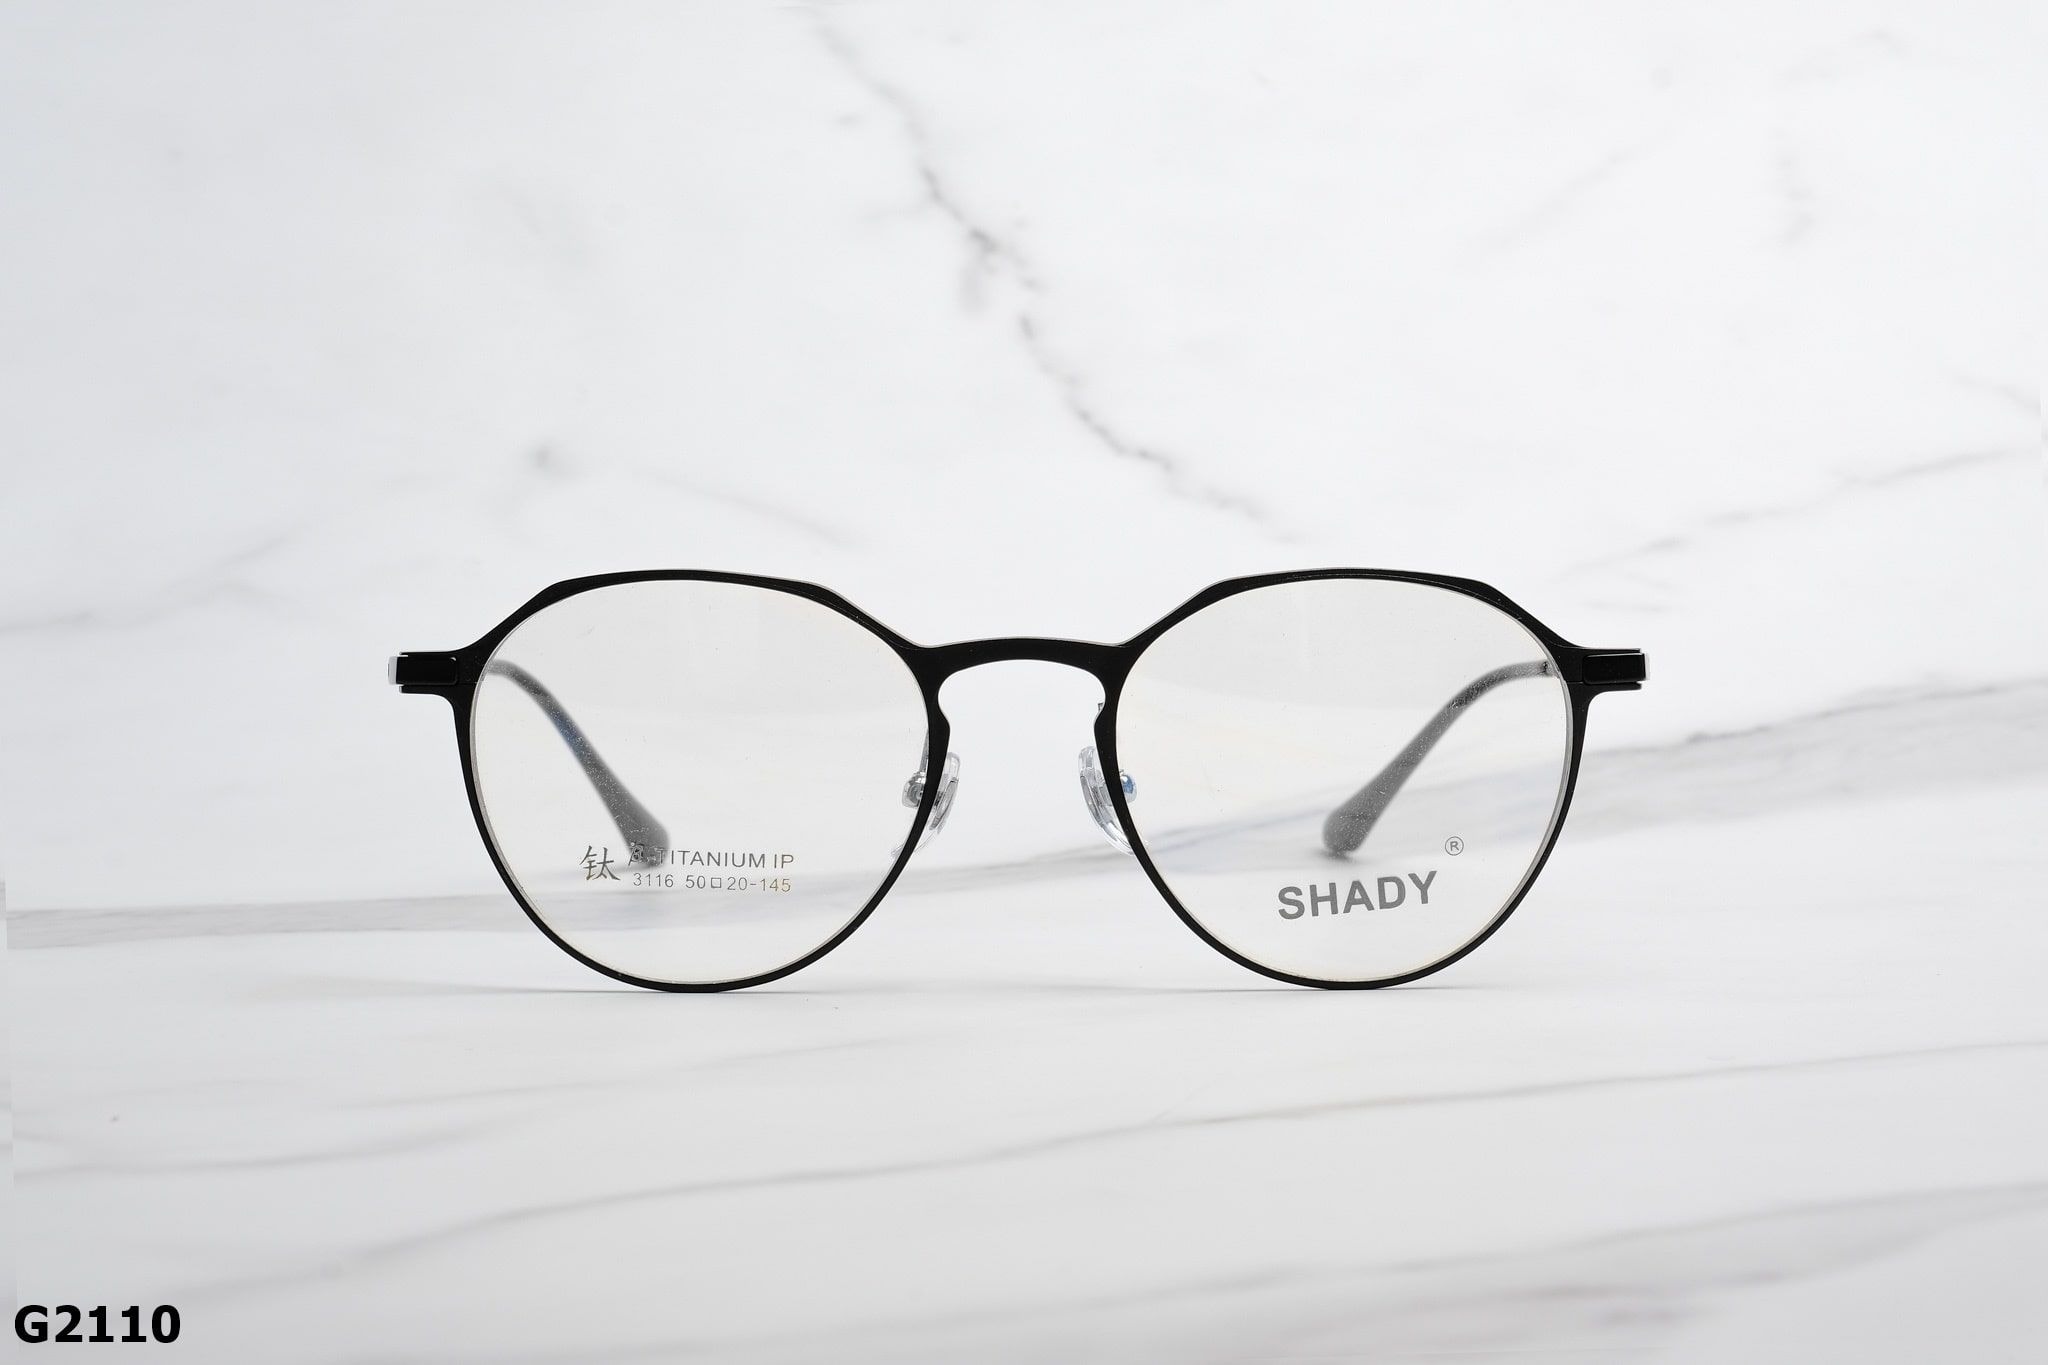  SHADY Eyewear - Glasses - G2110 